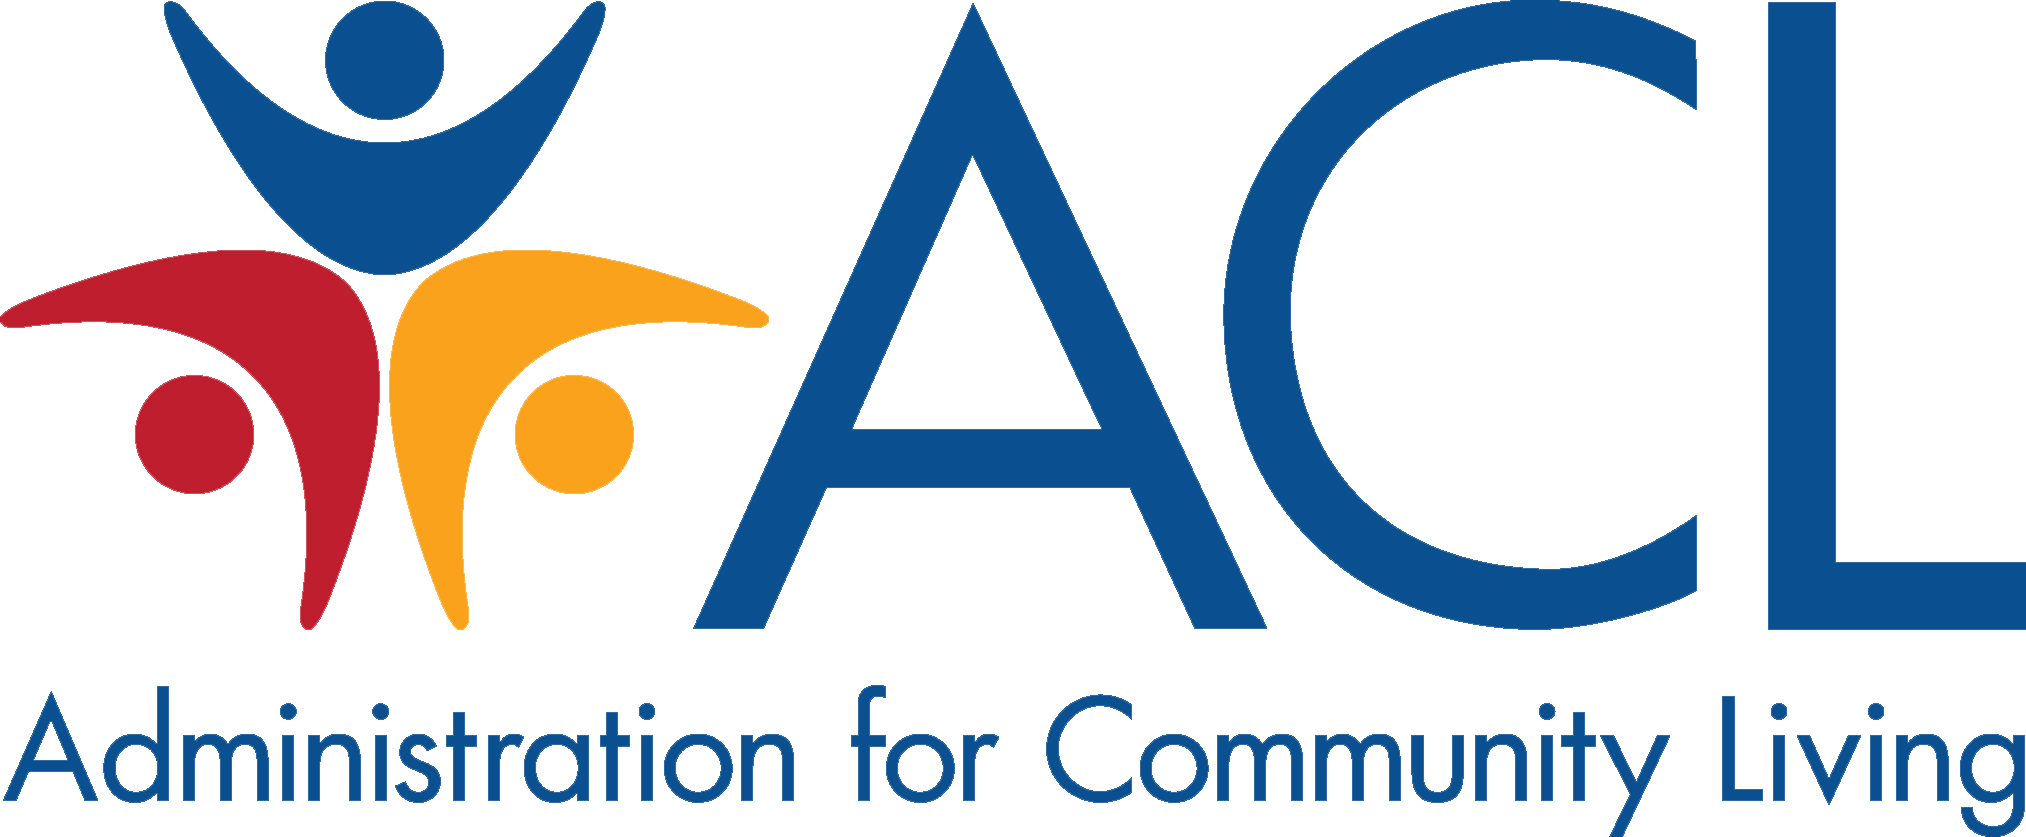 Administration for Community Living logo